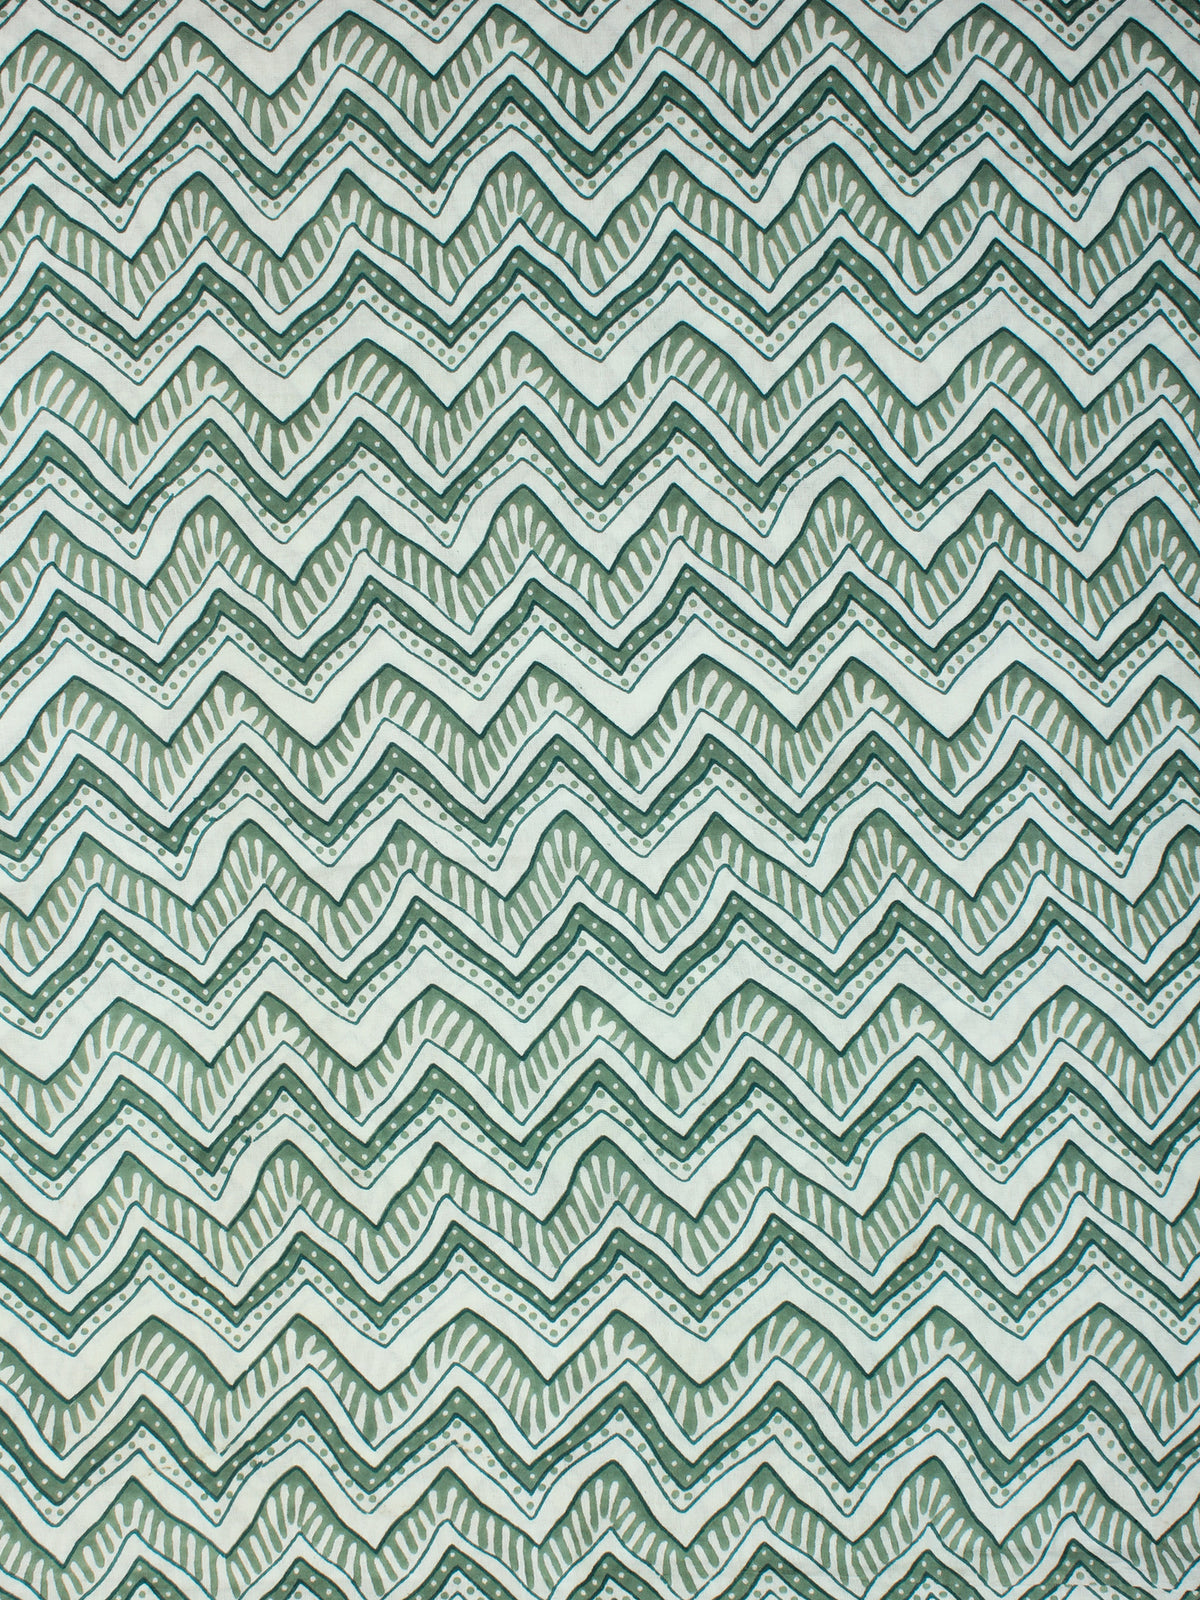 Sage Green White Block Printed Cotton Fabric Per Meter - F001F2247